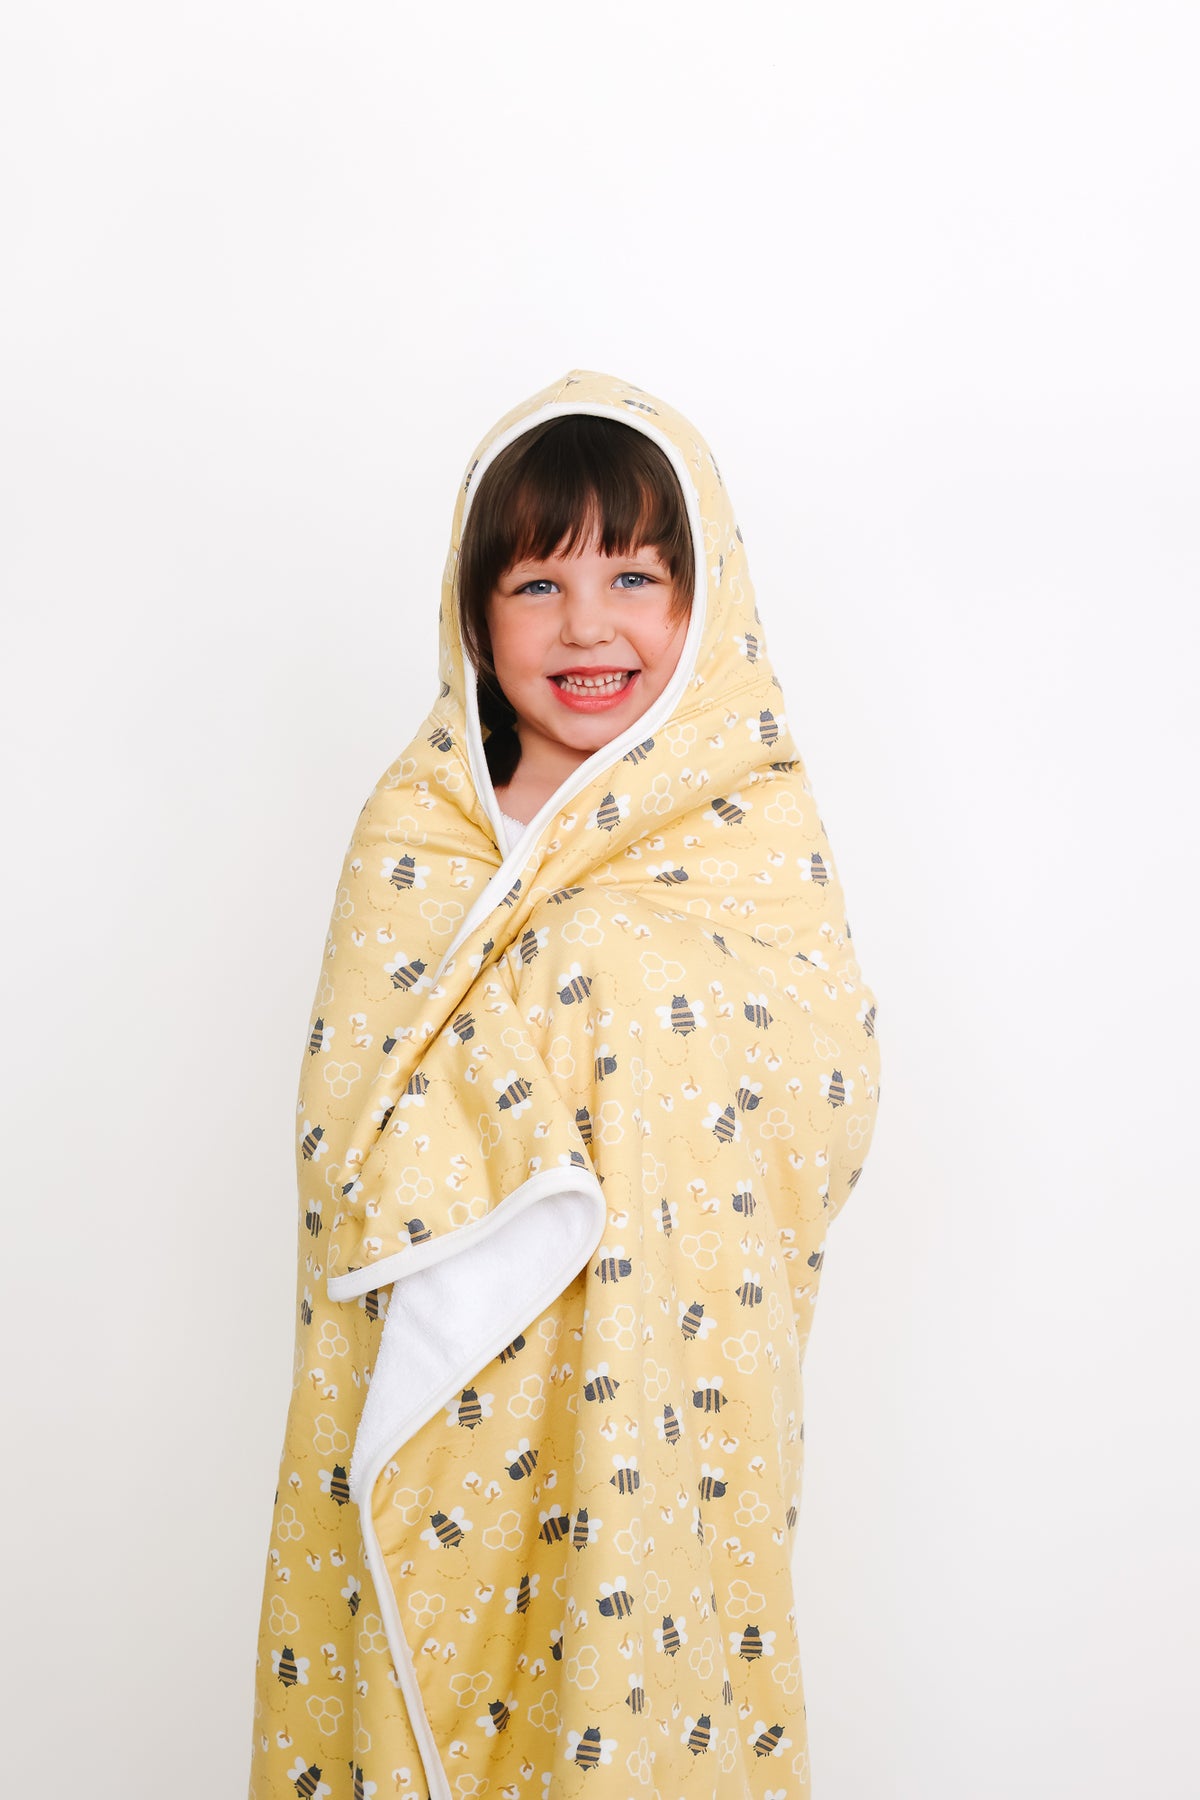 Premium Big Kid Hooded Towel - Honeycomb